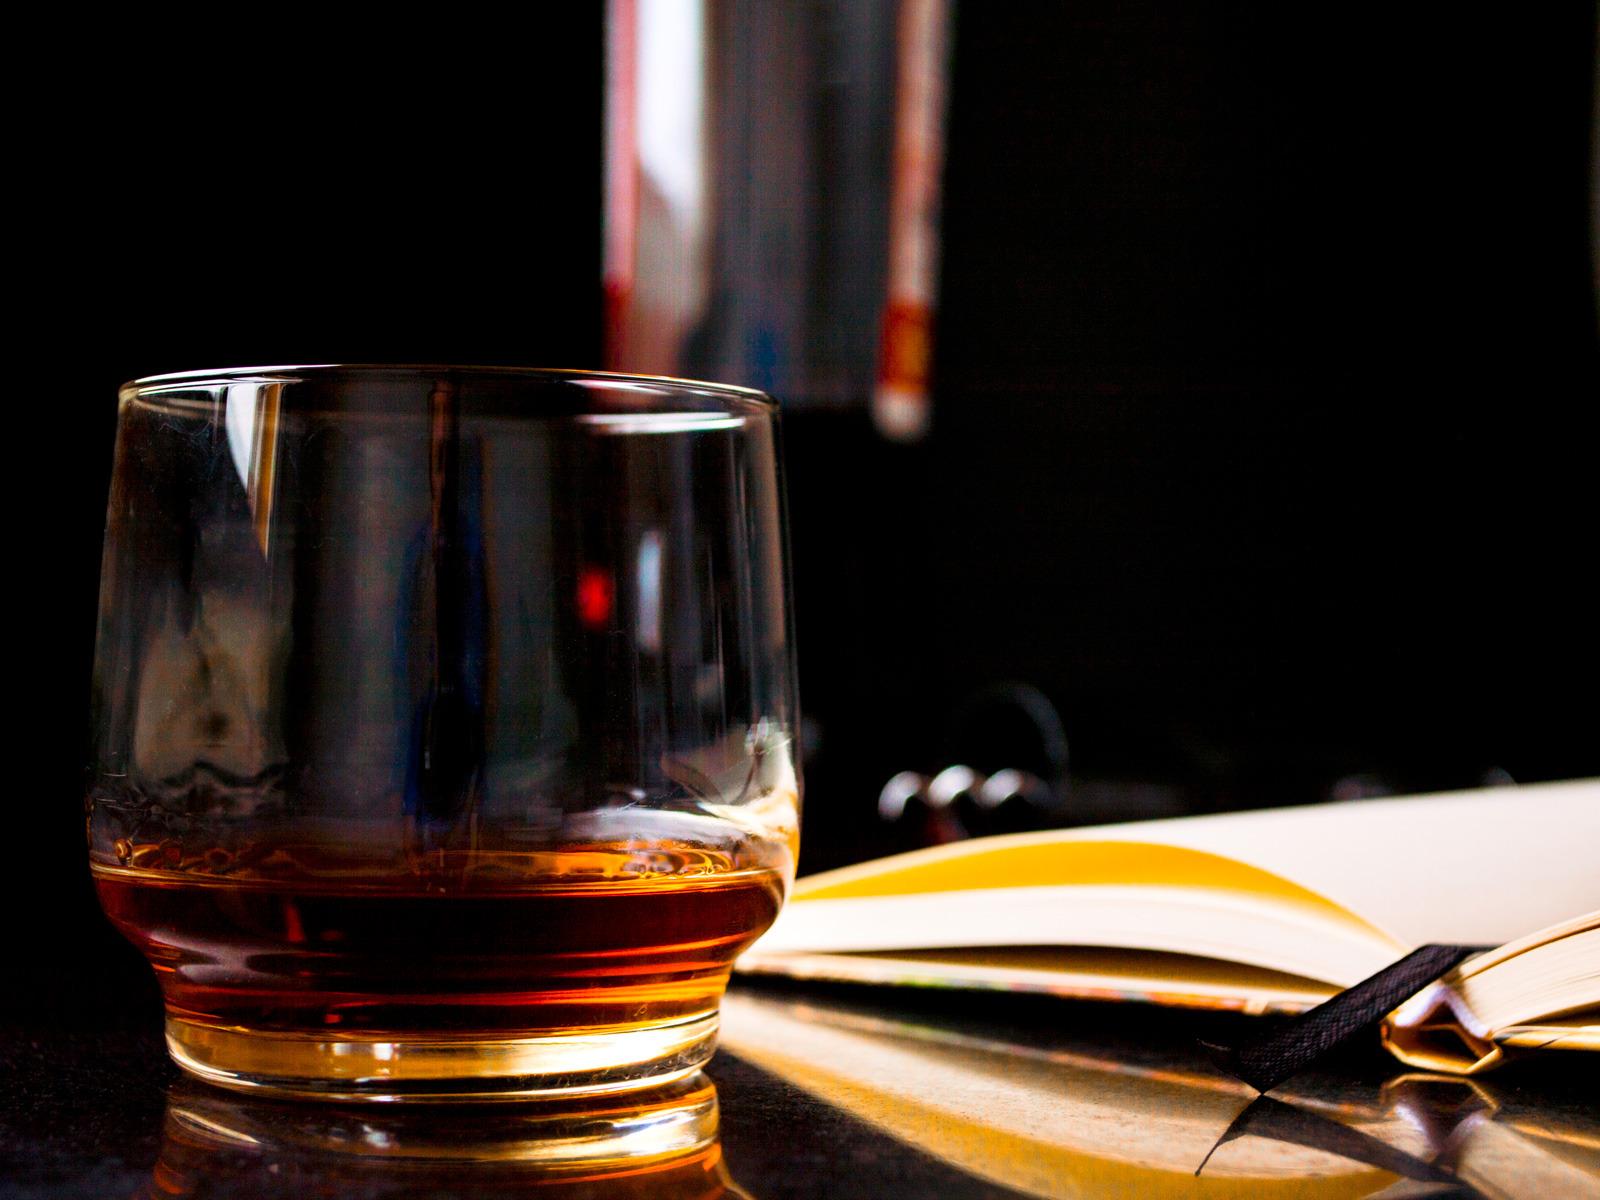 Szklanka whisky stoi obok otwartej książki © cromaconceptovisual/Pixabay